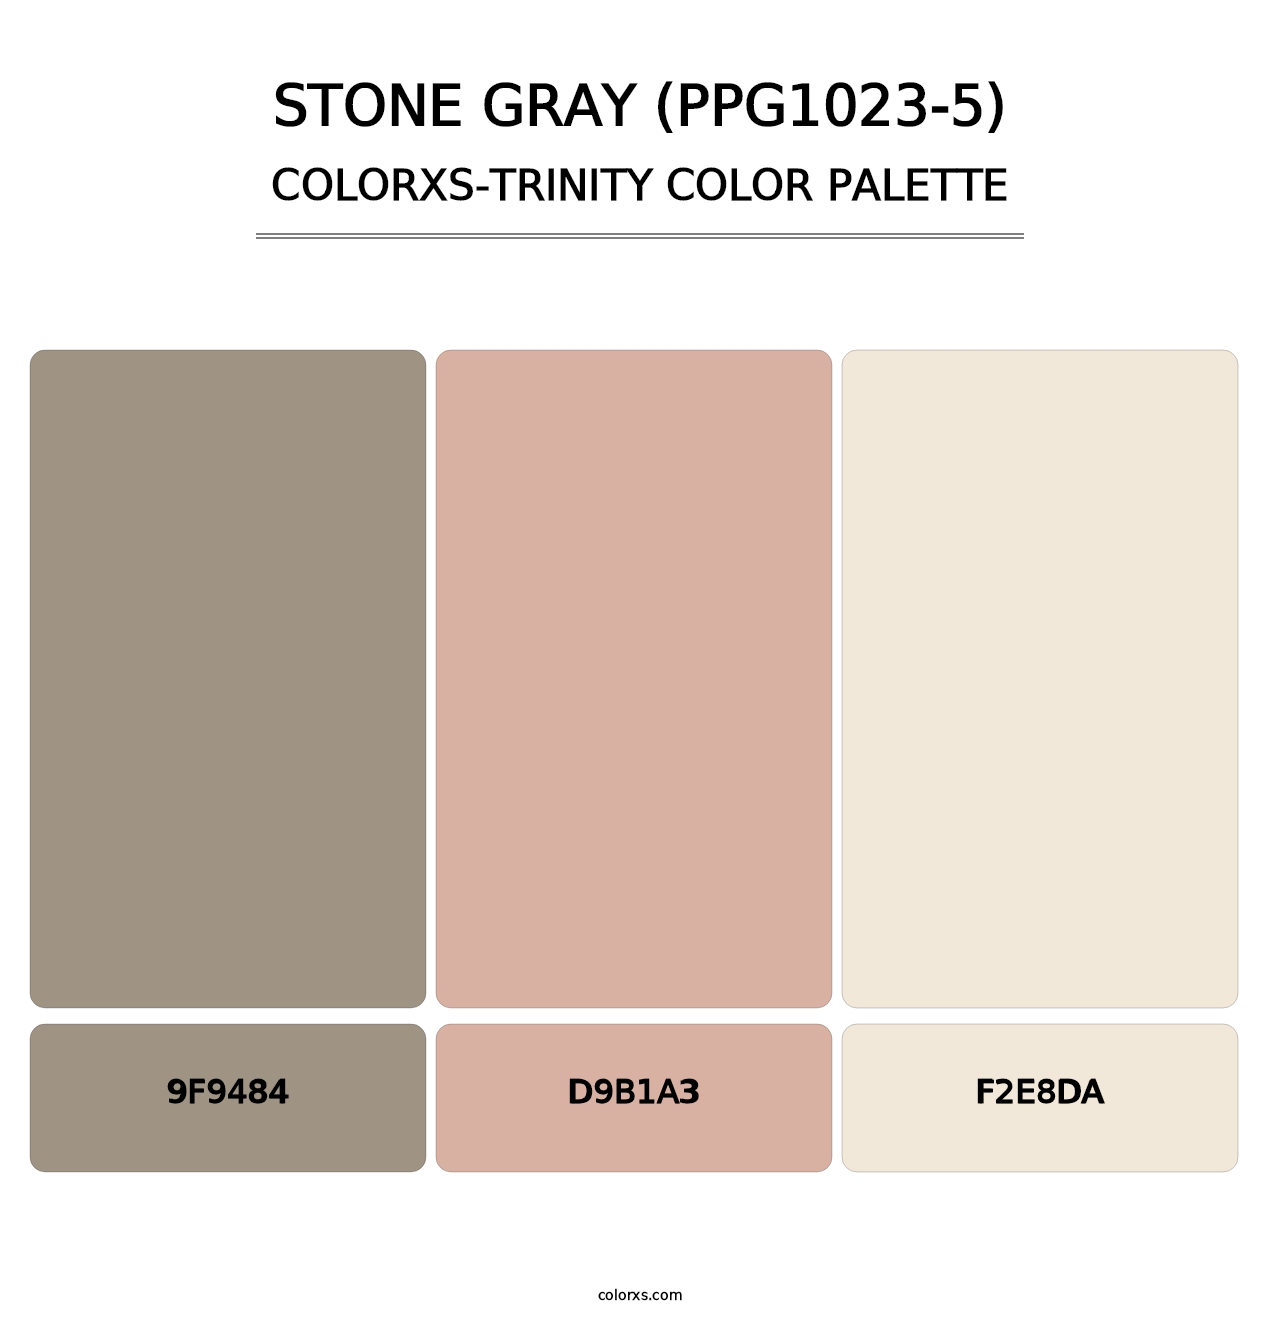 Stone Gray (PPG1023-5) - Colorxs Trinity Palette